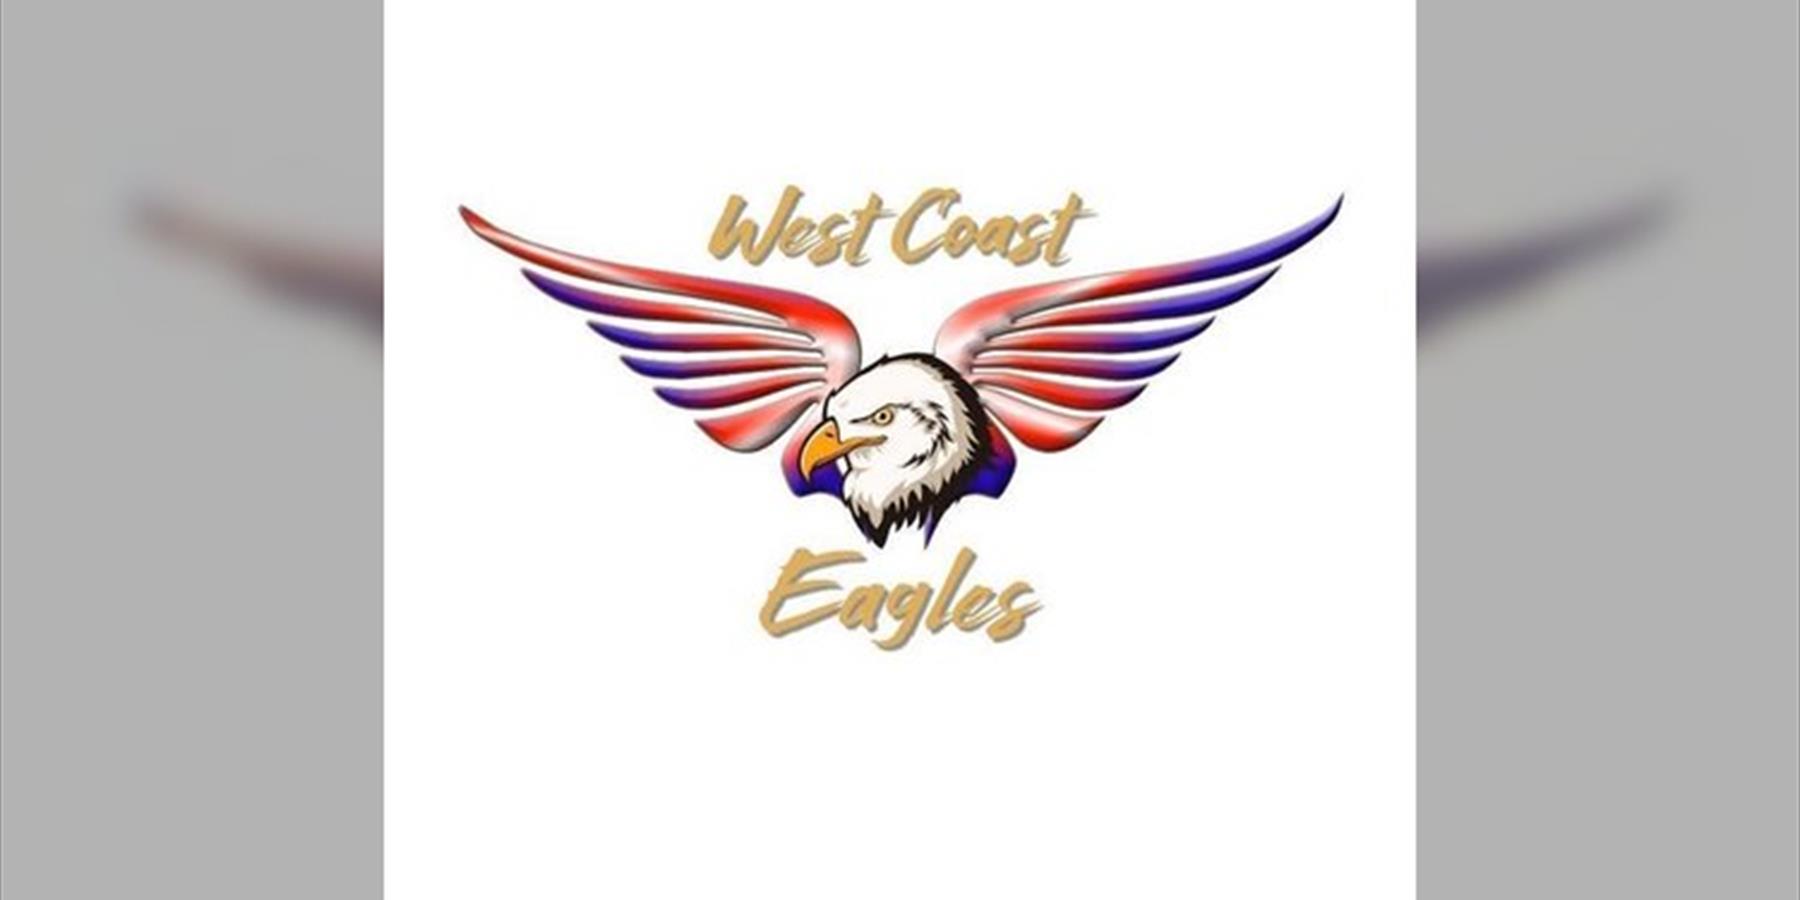 The West Coast Eagles